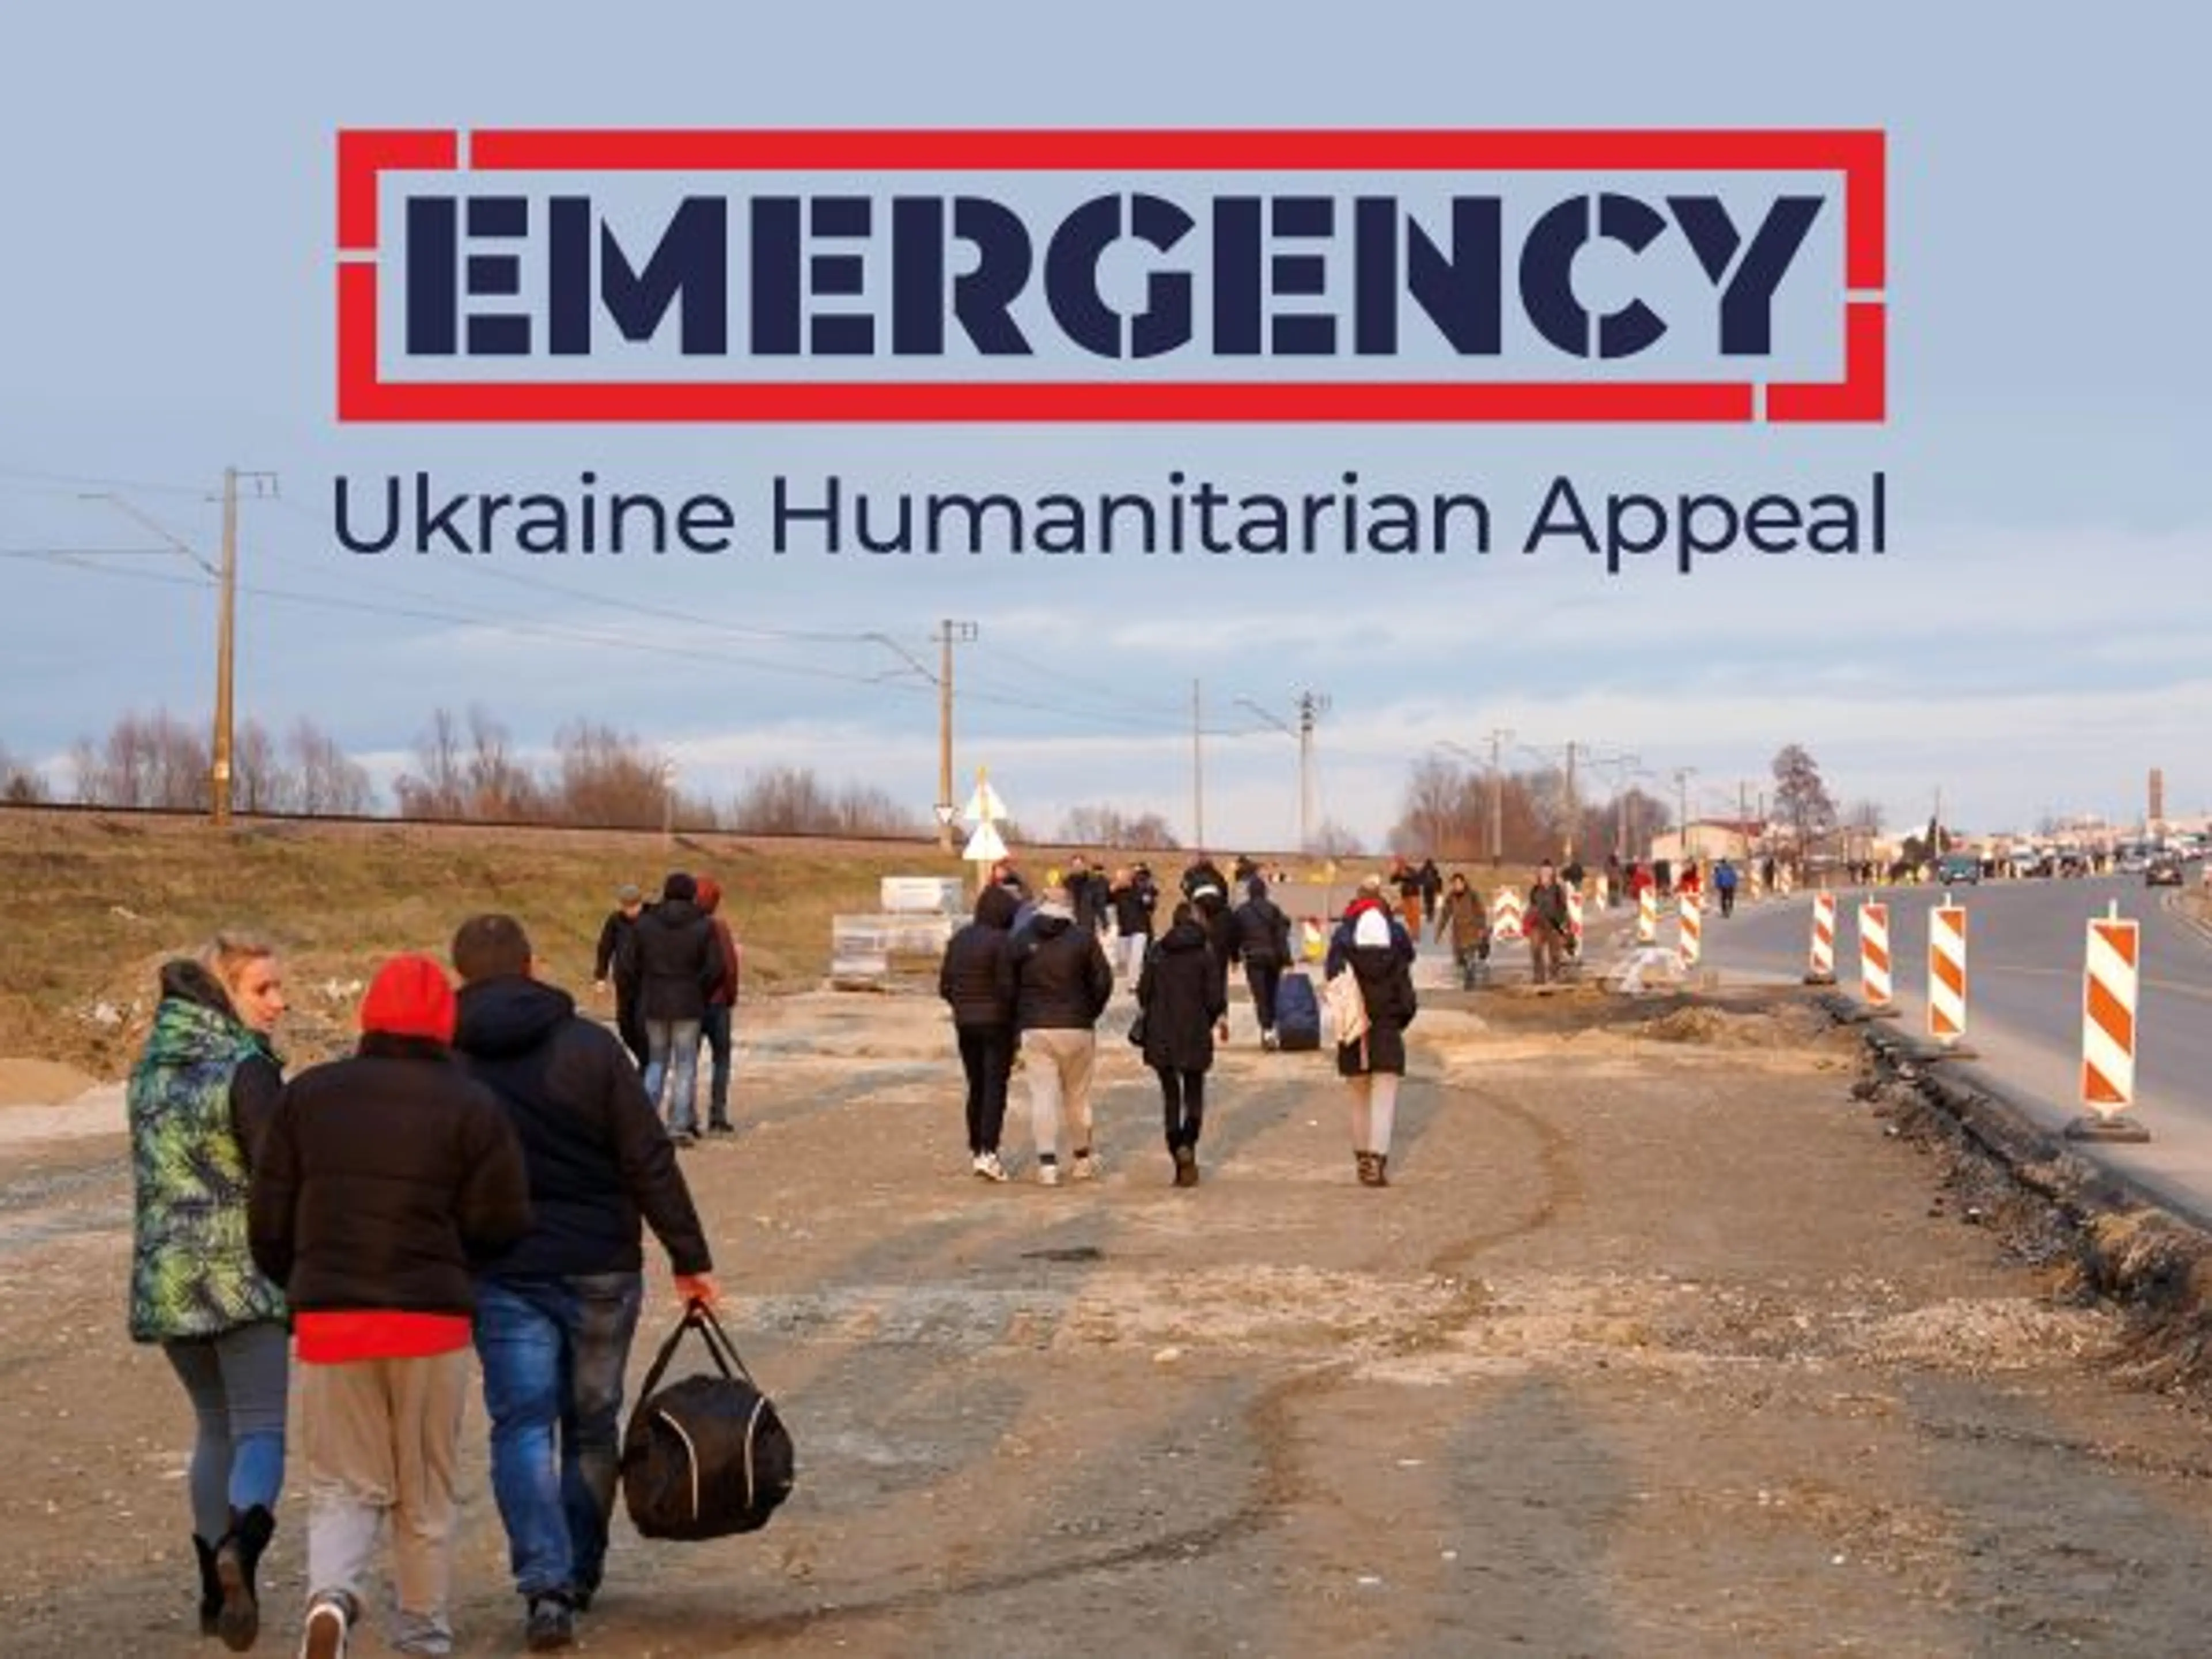 Ukraine Humanitarian Appeal Image